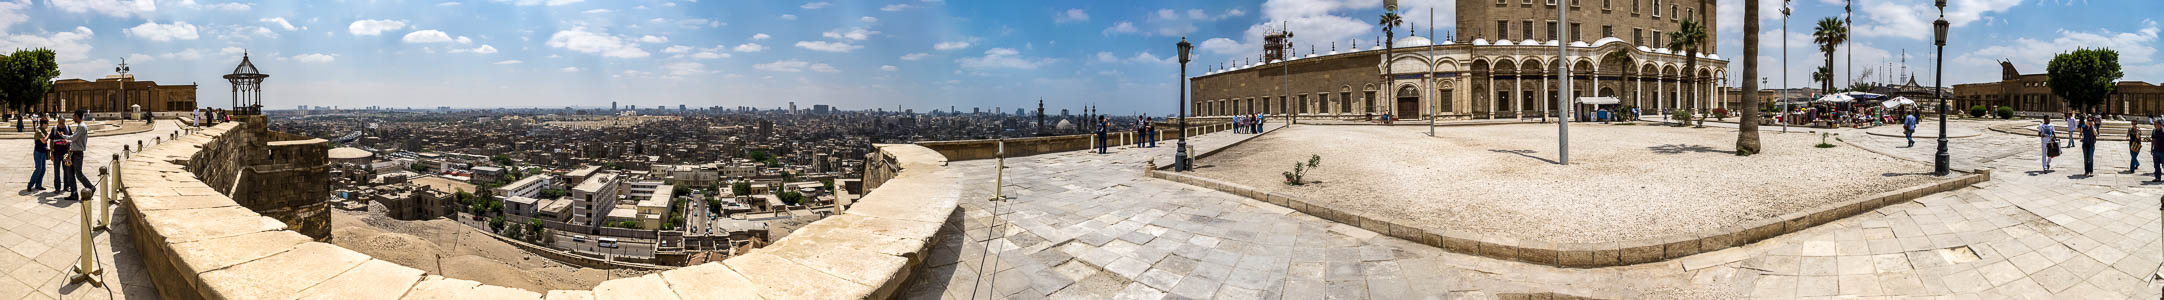 Kairo Zitadelle von Saladin Mosque of Muhammad Ali Salah El Din Citadel